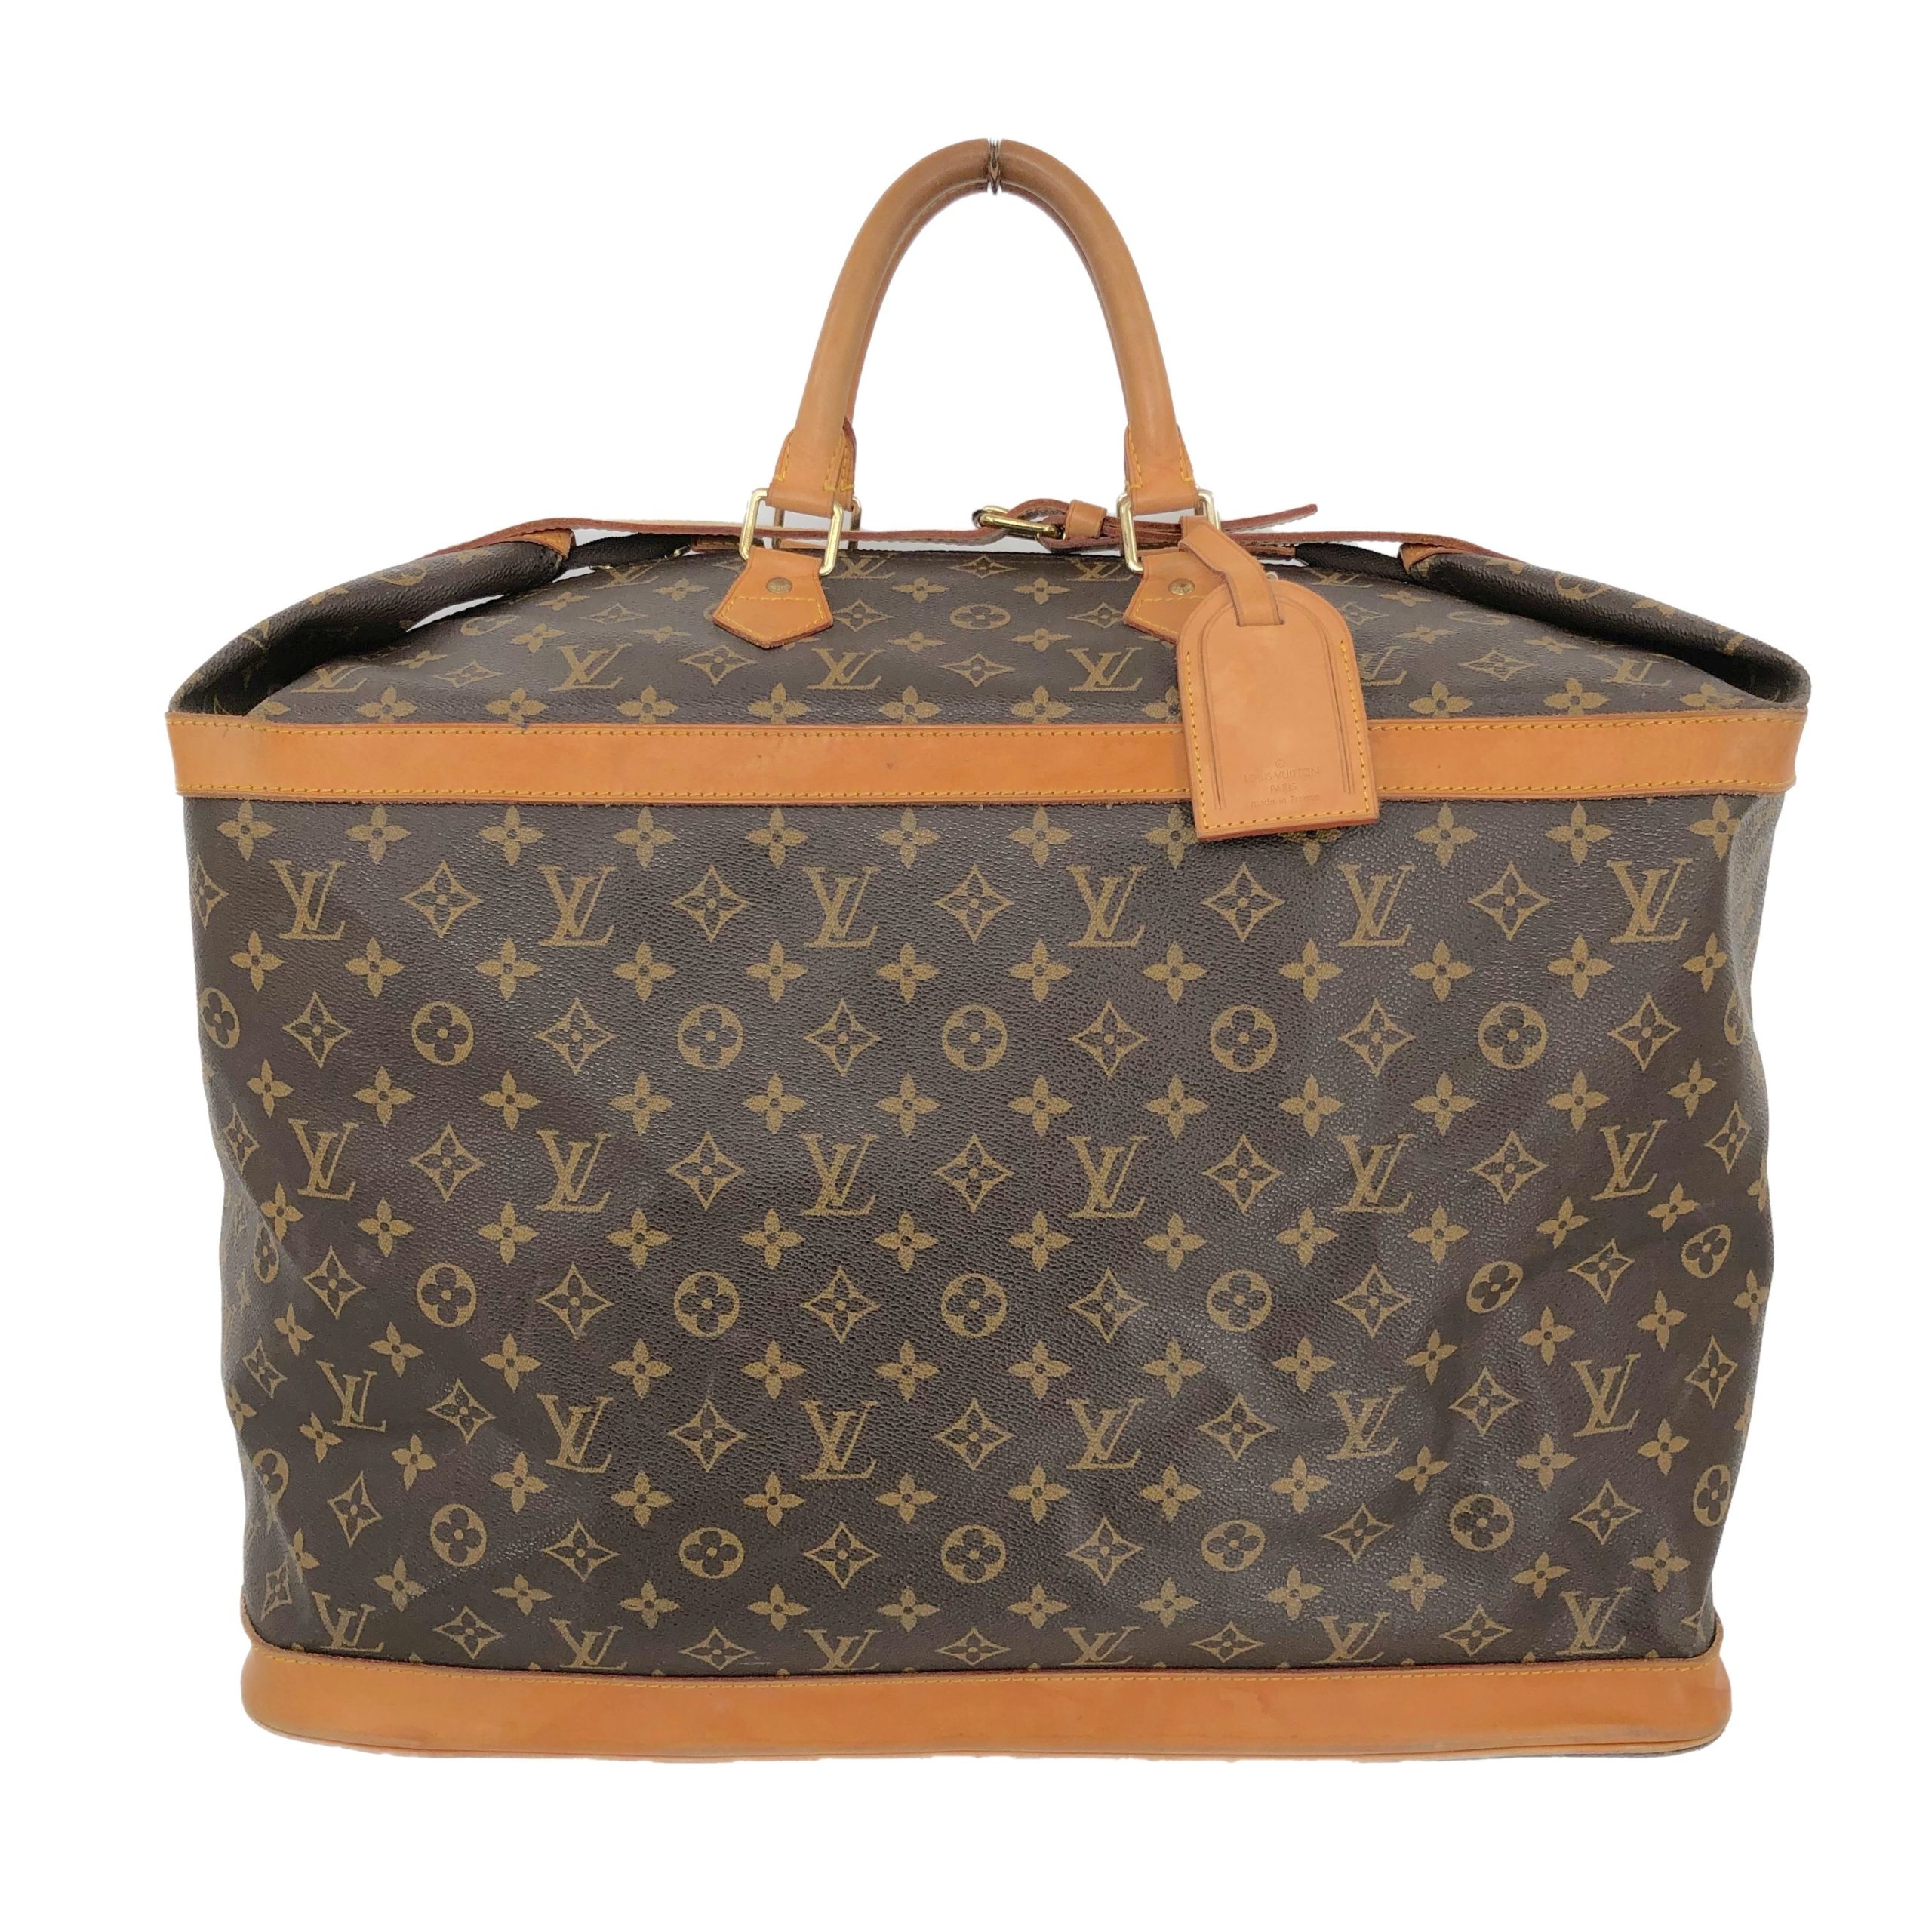 Louis Vuitton Cruiser 50 Travel Bag.